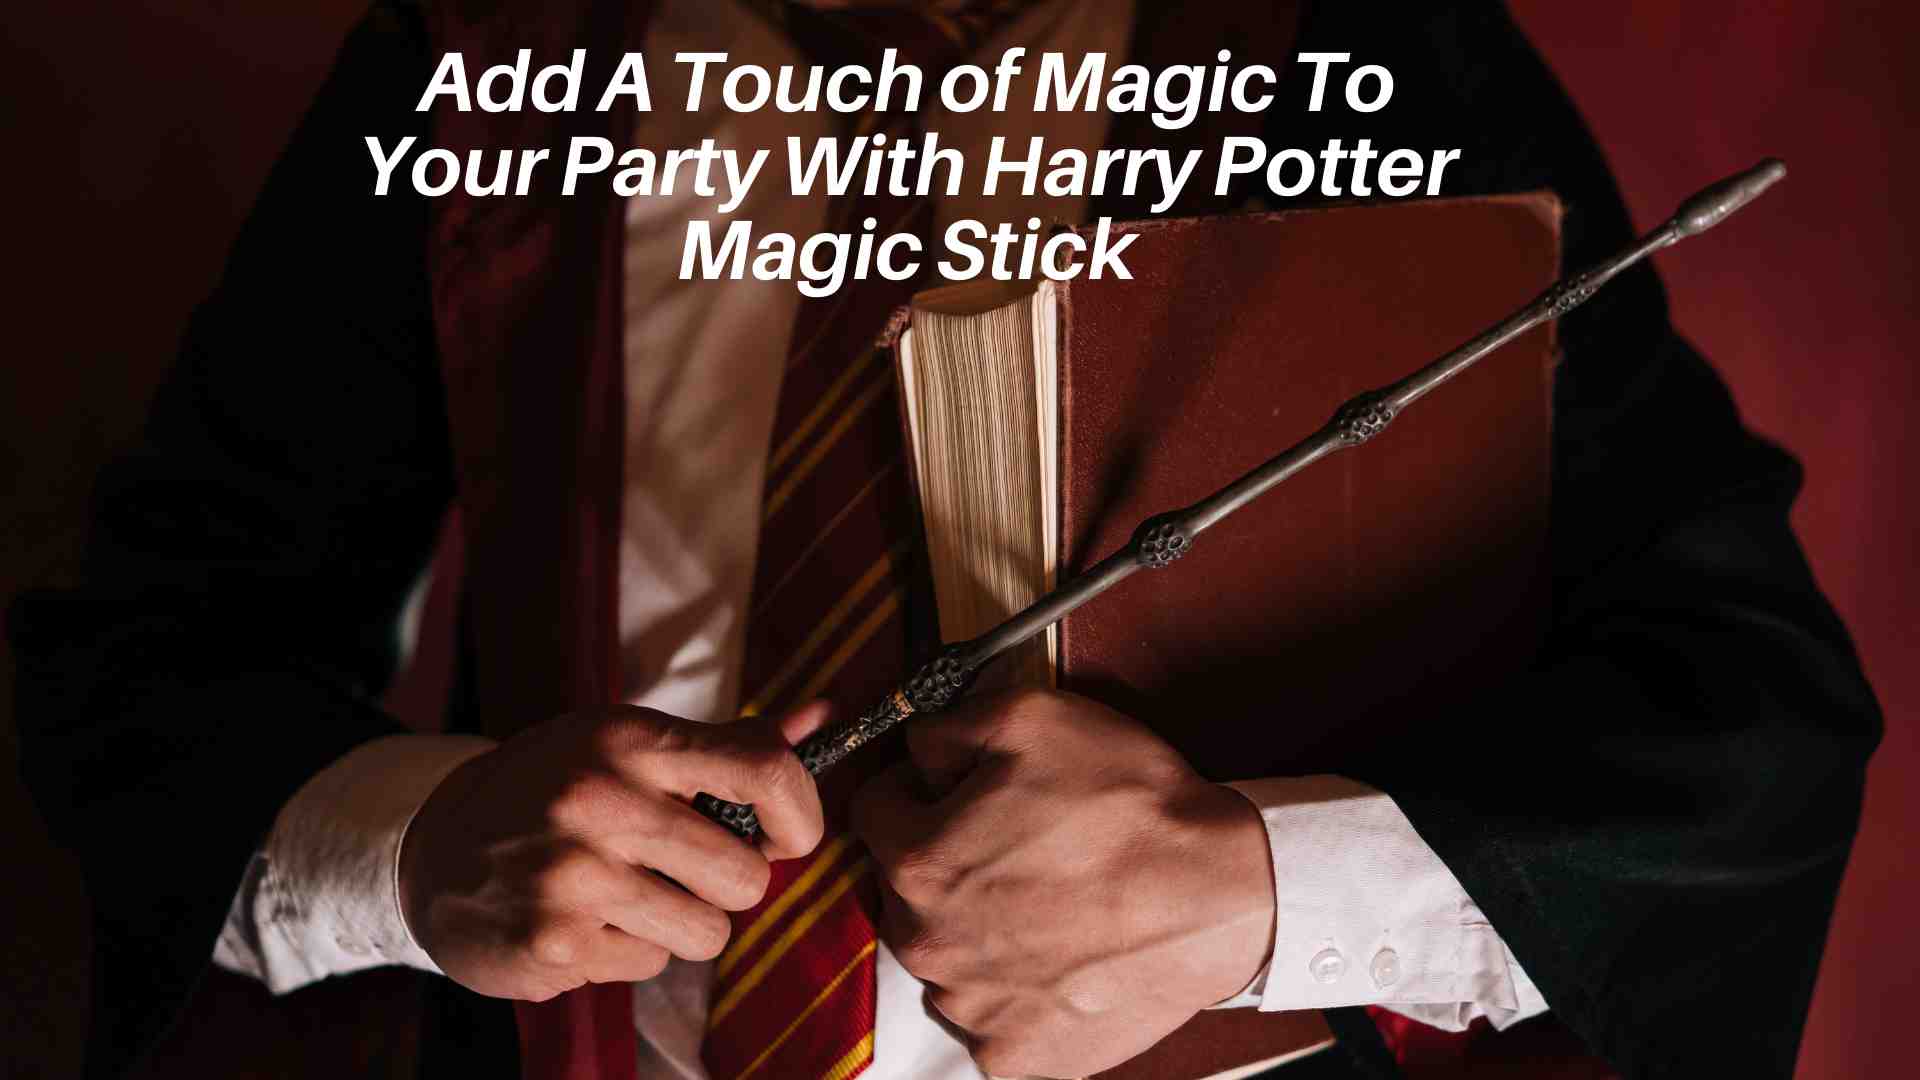 Harry Potter Magic Stick